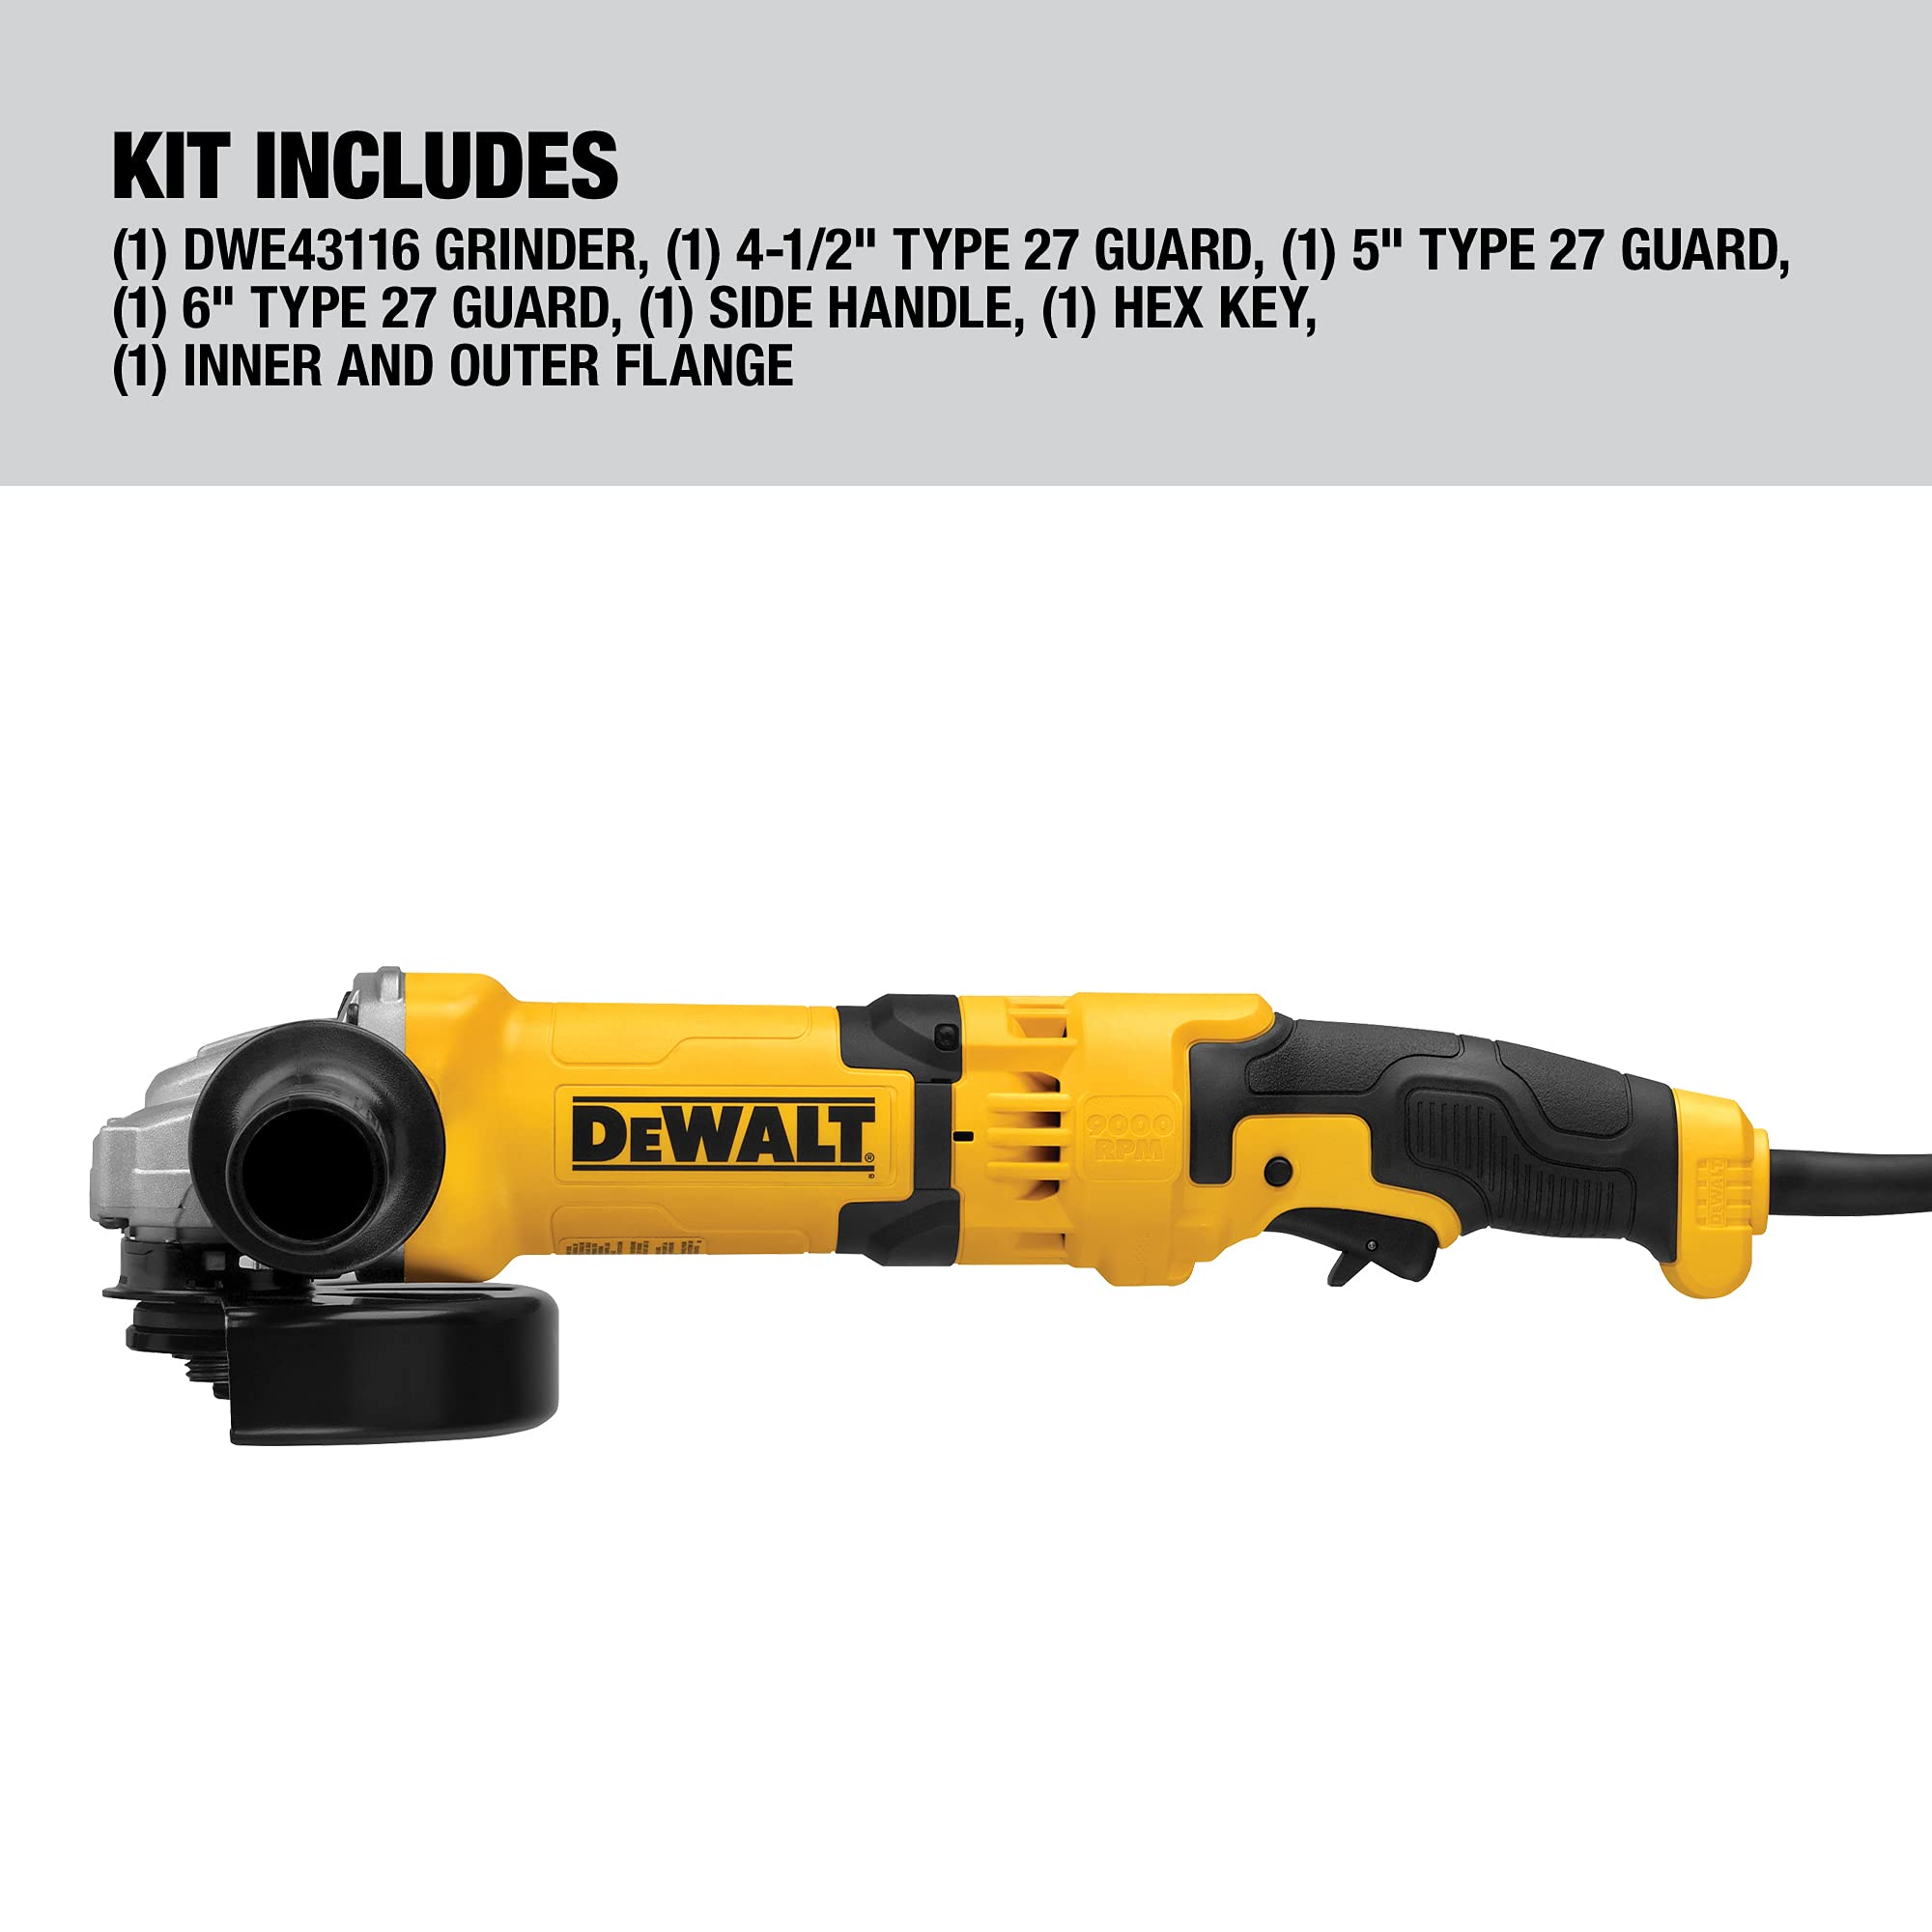 DEWALT Angle Grinder Tool, 4-1/2-Inch to 6-Inch, Trigger Switch (DWE43116), Black,yellow,grey